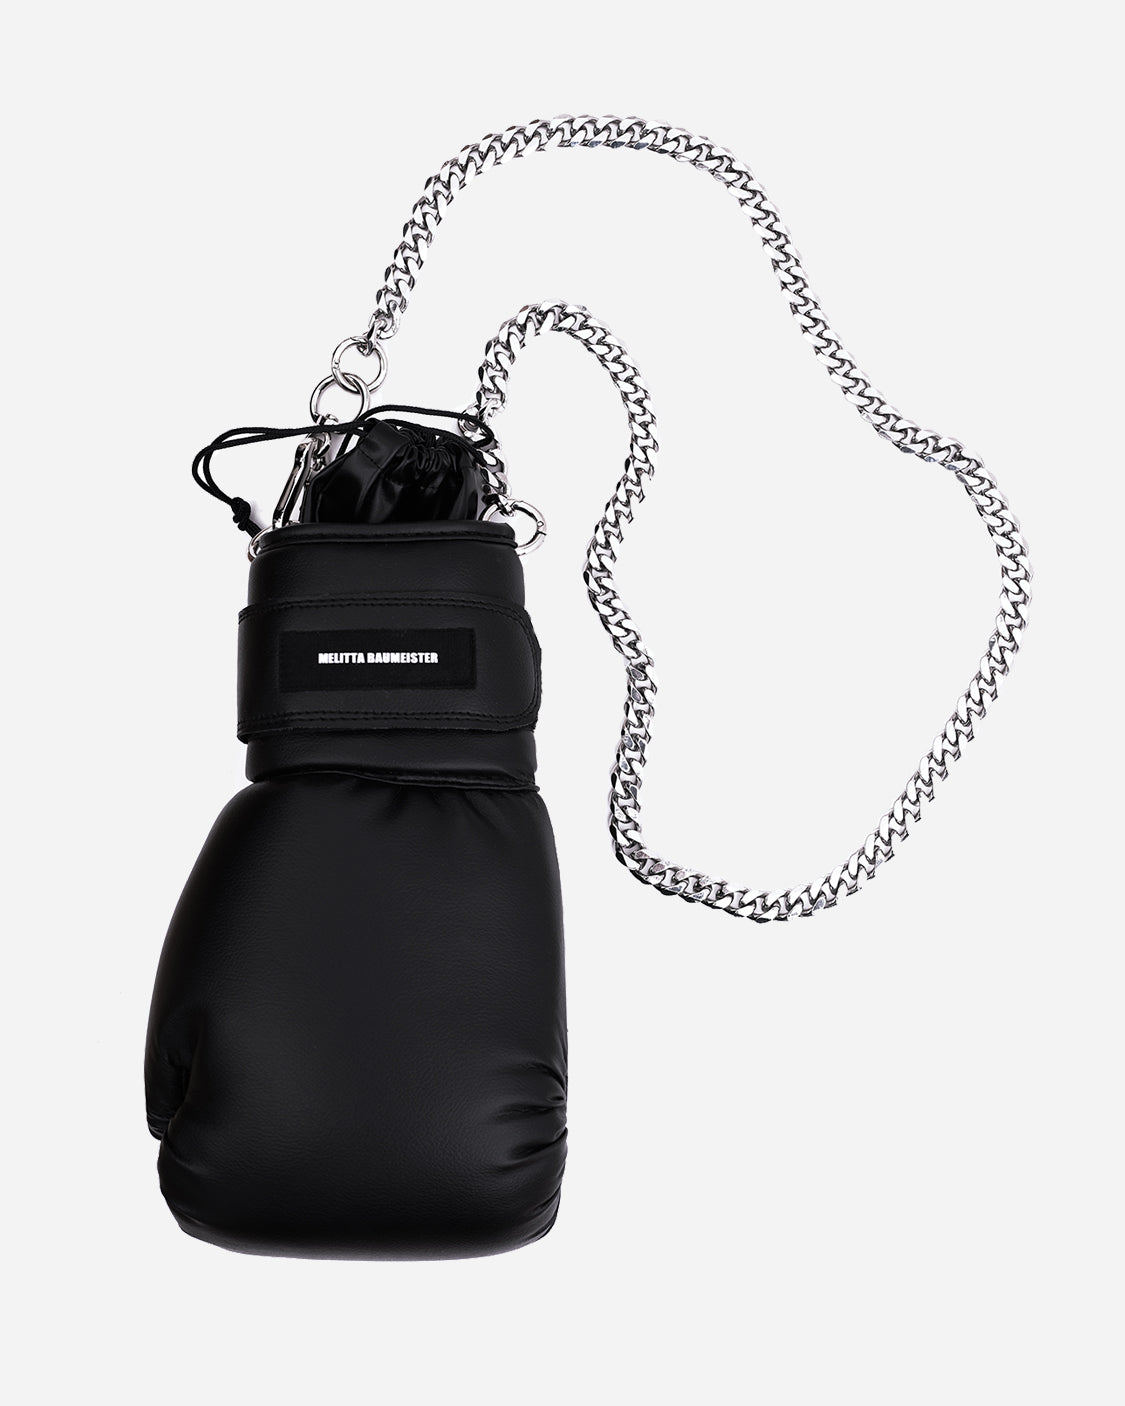 MELITTA BAUMEISTER Boxing Glove Bag